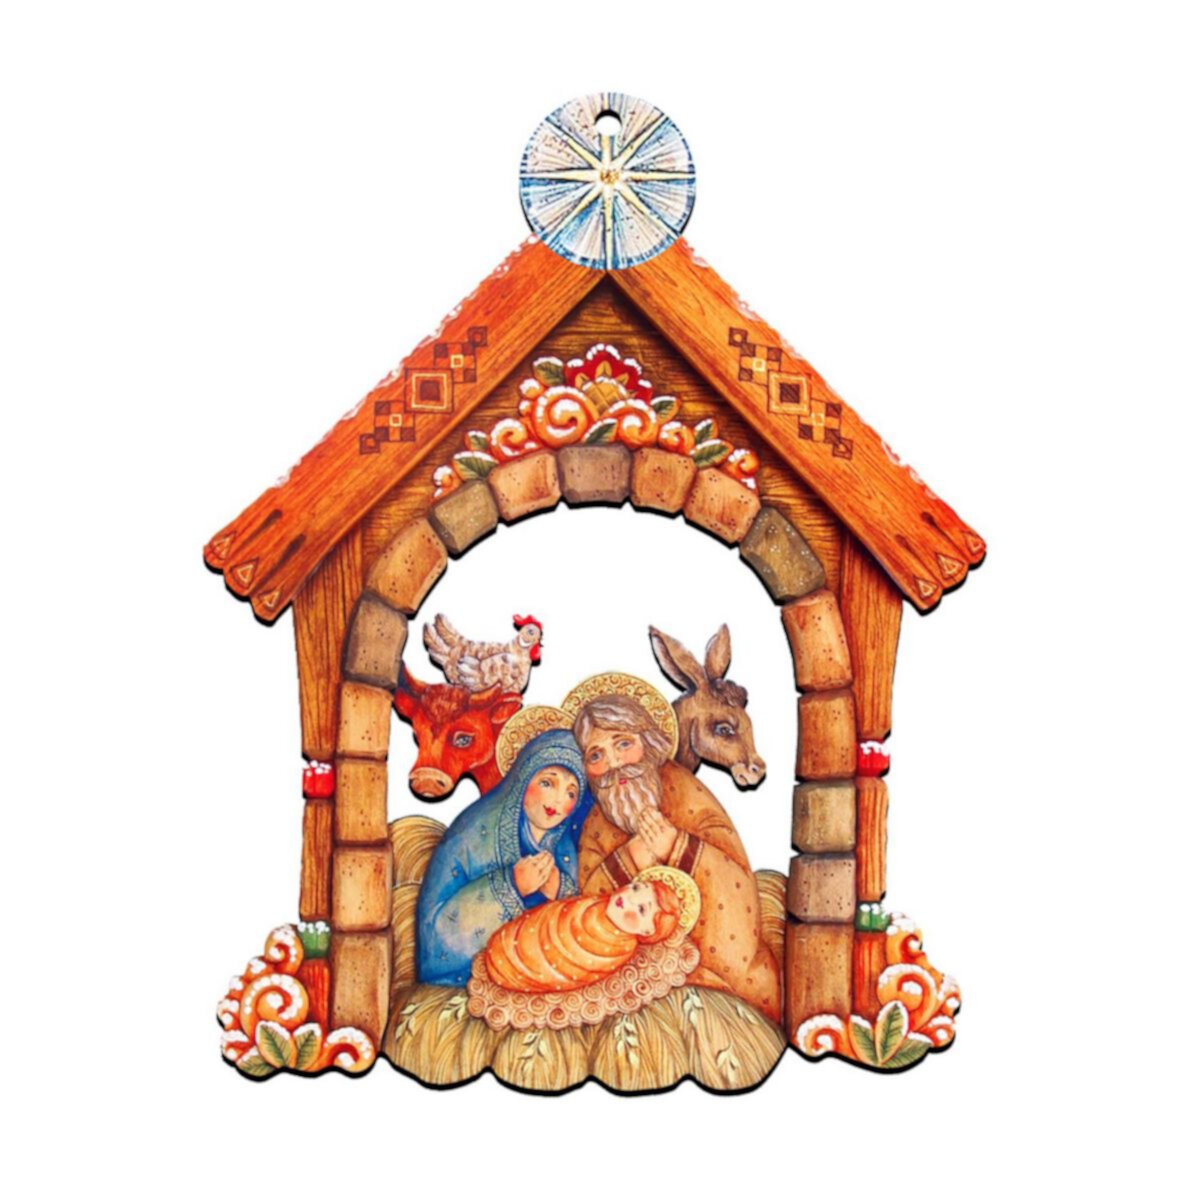 Village Nativity Nativity Door Decor by G. DeBrekht - Nativity Holiday Decor Designocracy